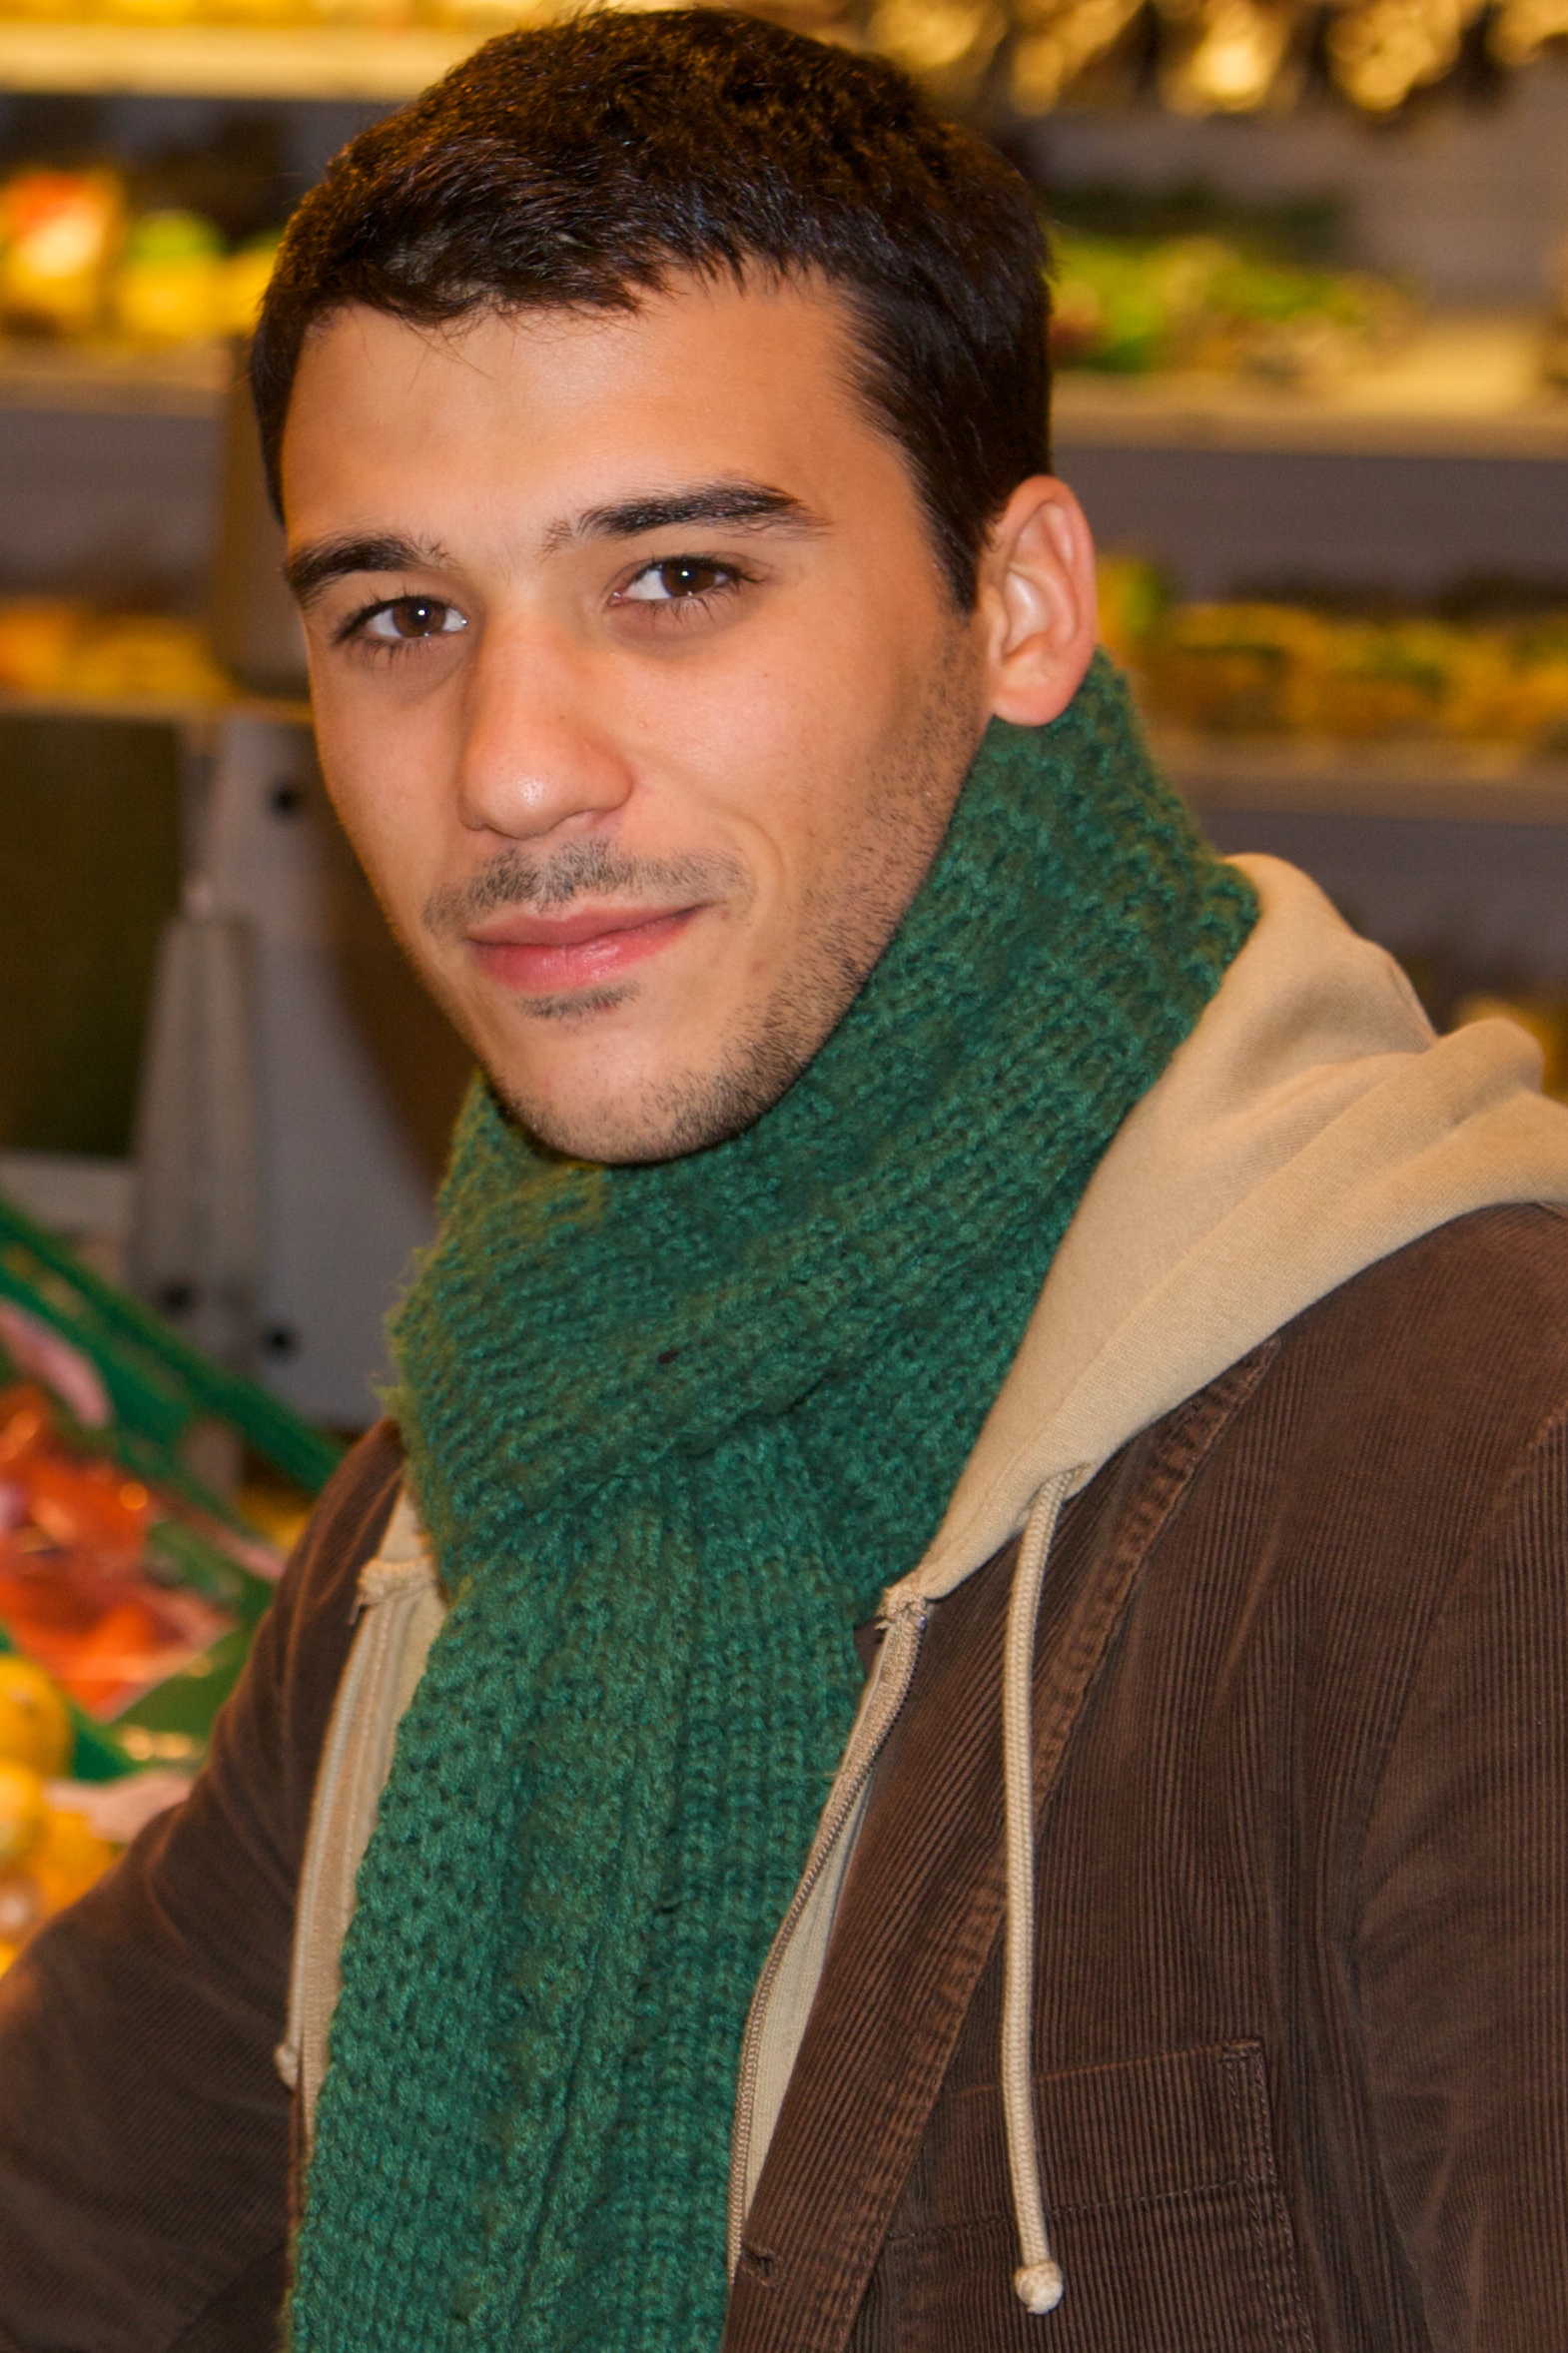 Bruno at the supermarket